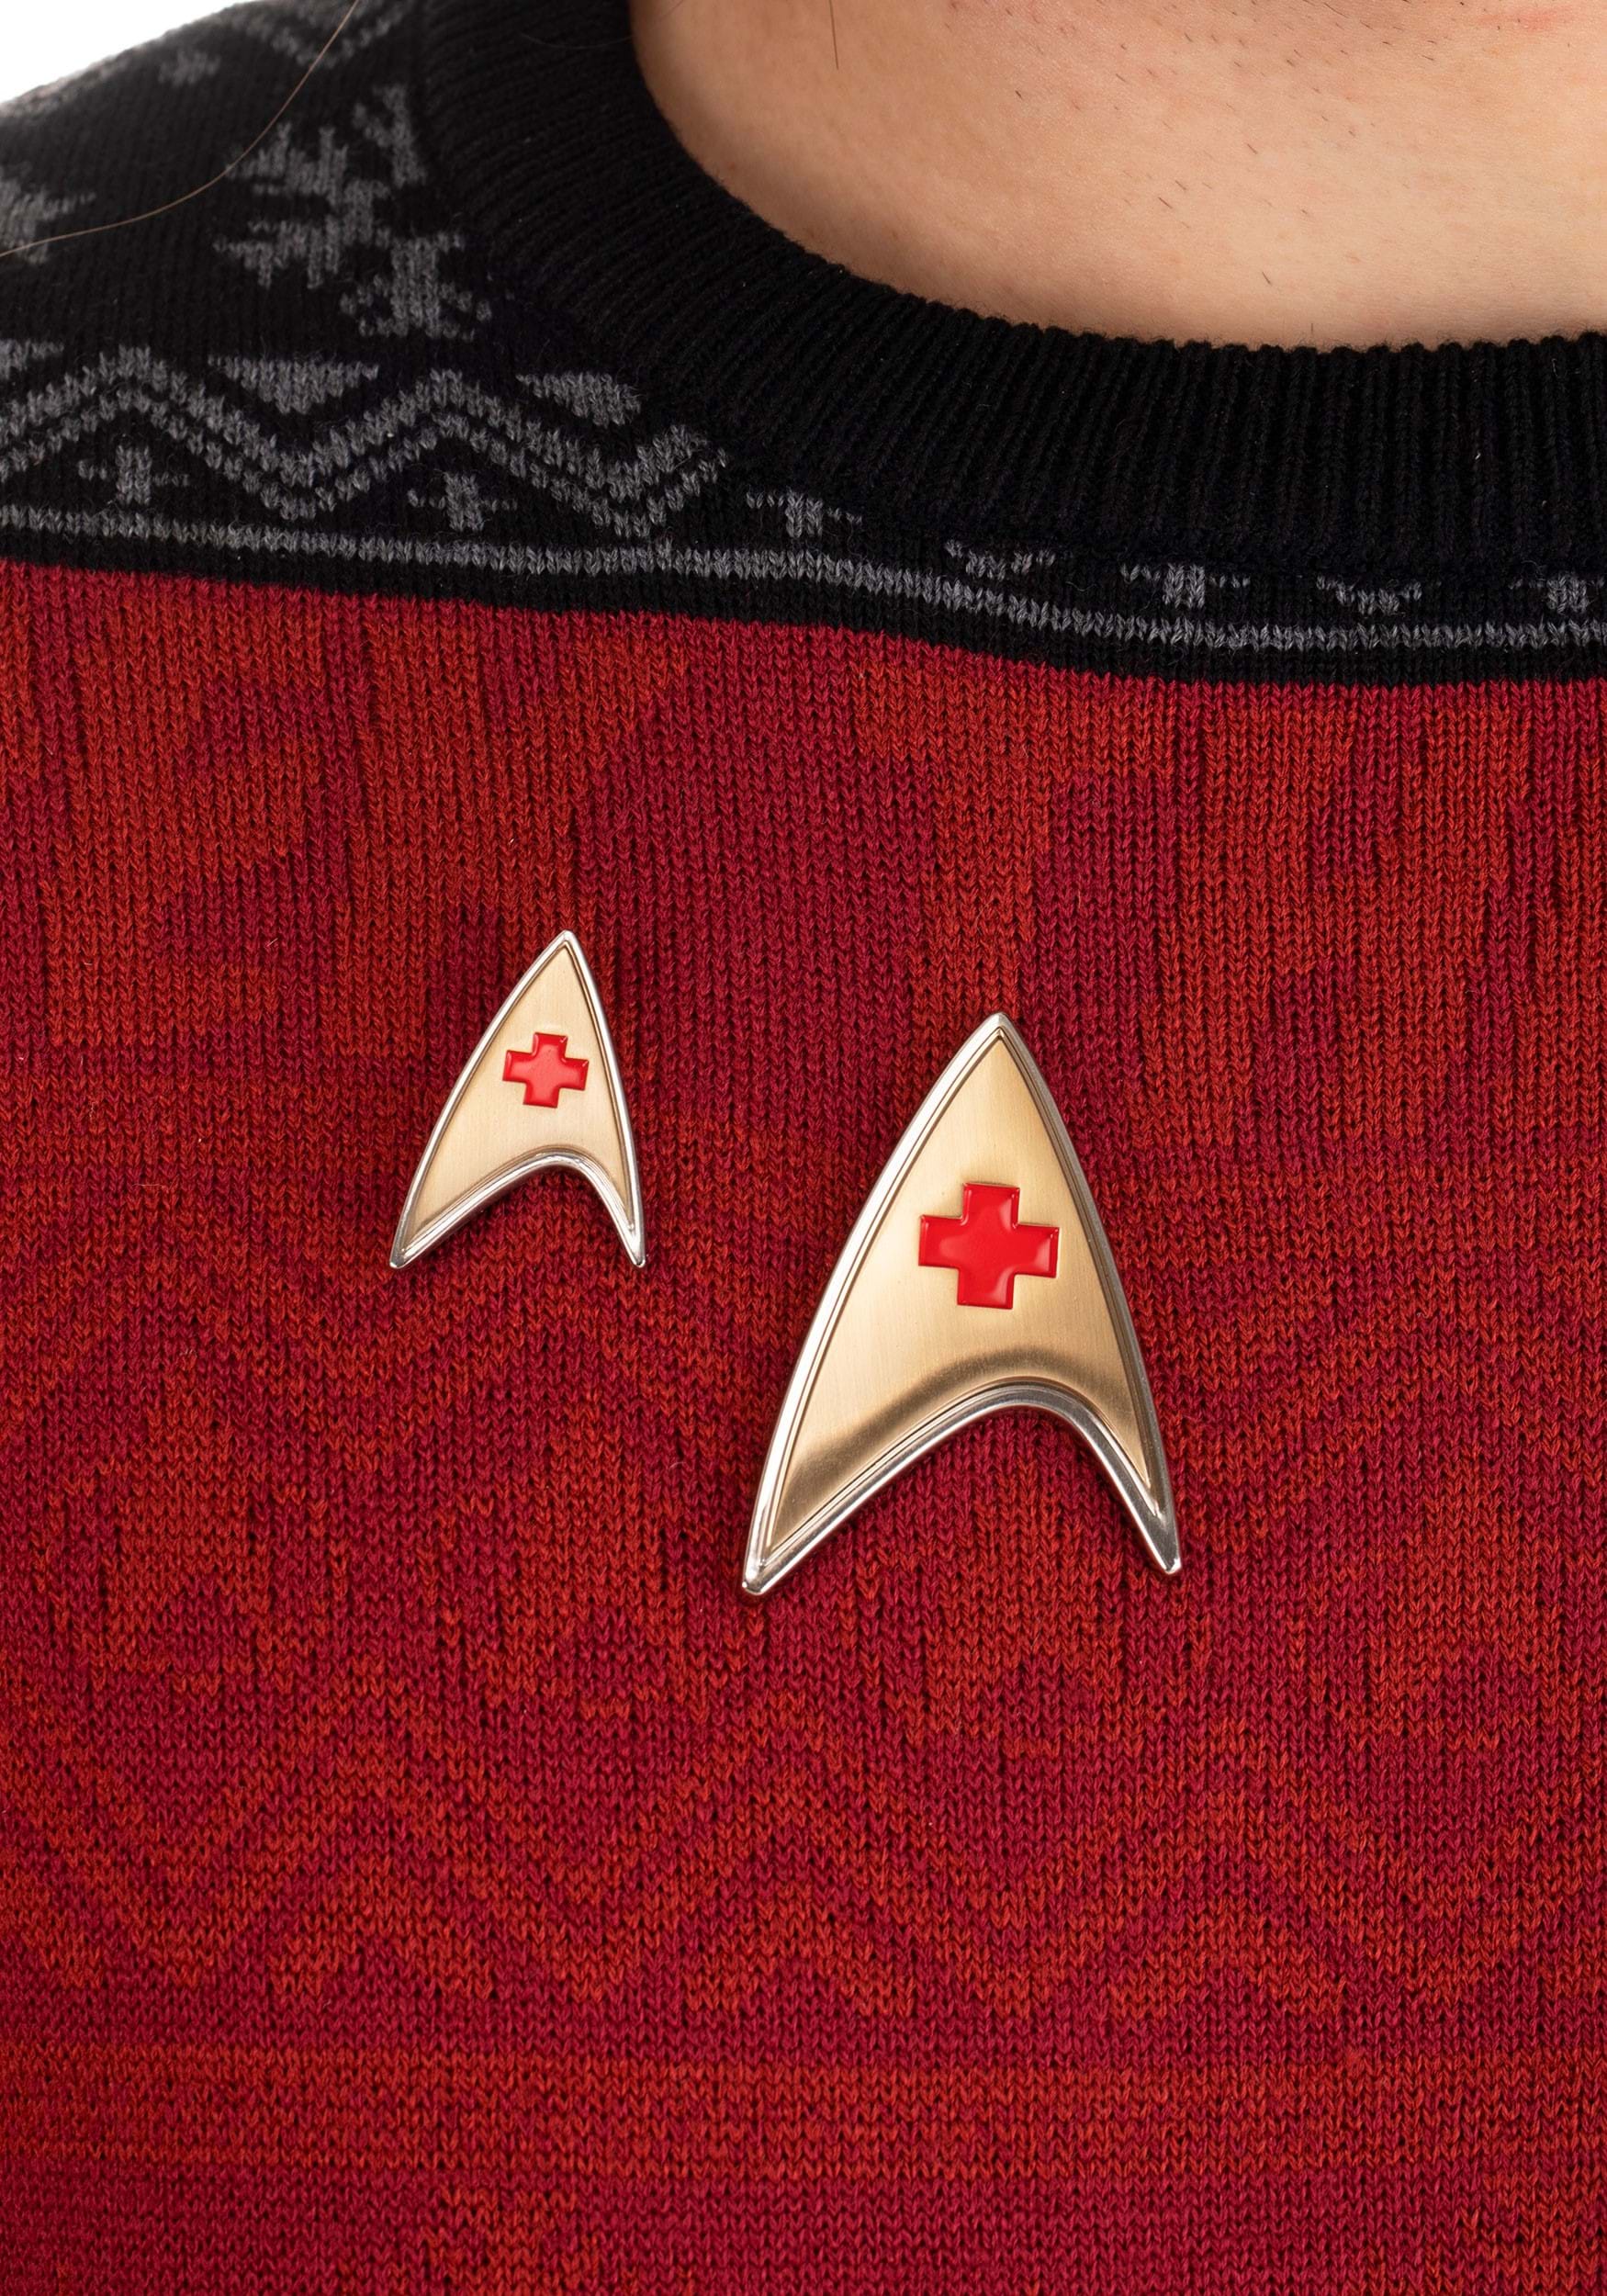 Star Trek: Discovery - Enterprise Medical Insign y PIN Multicolor